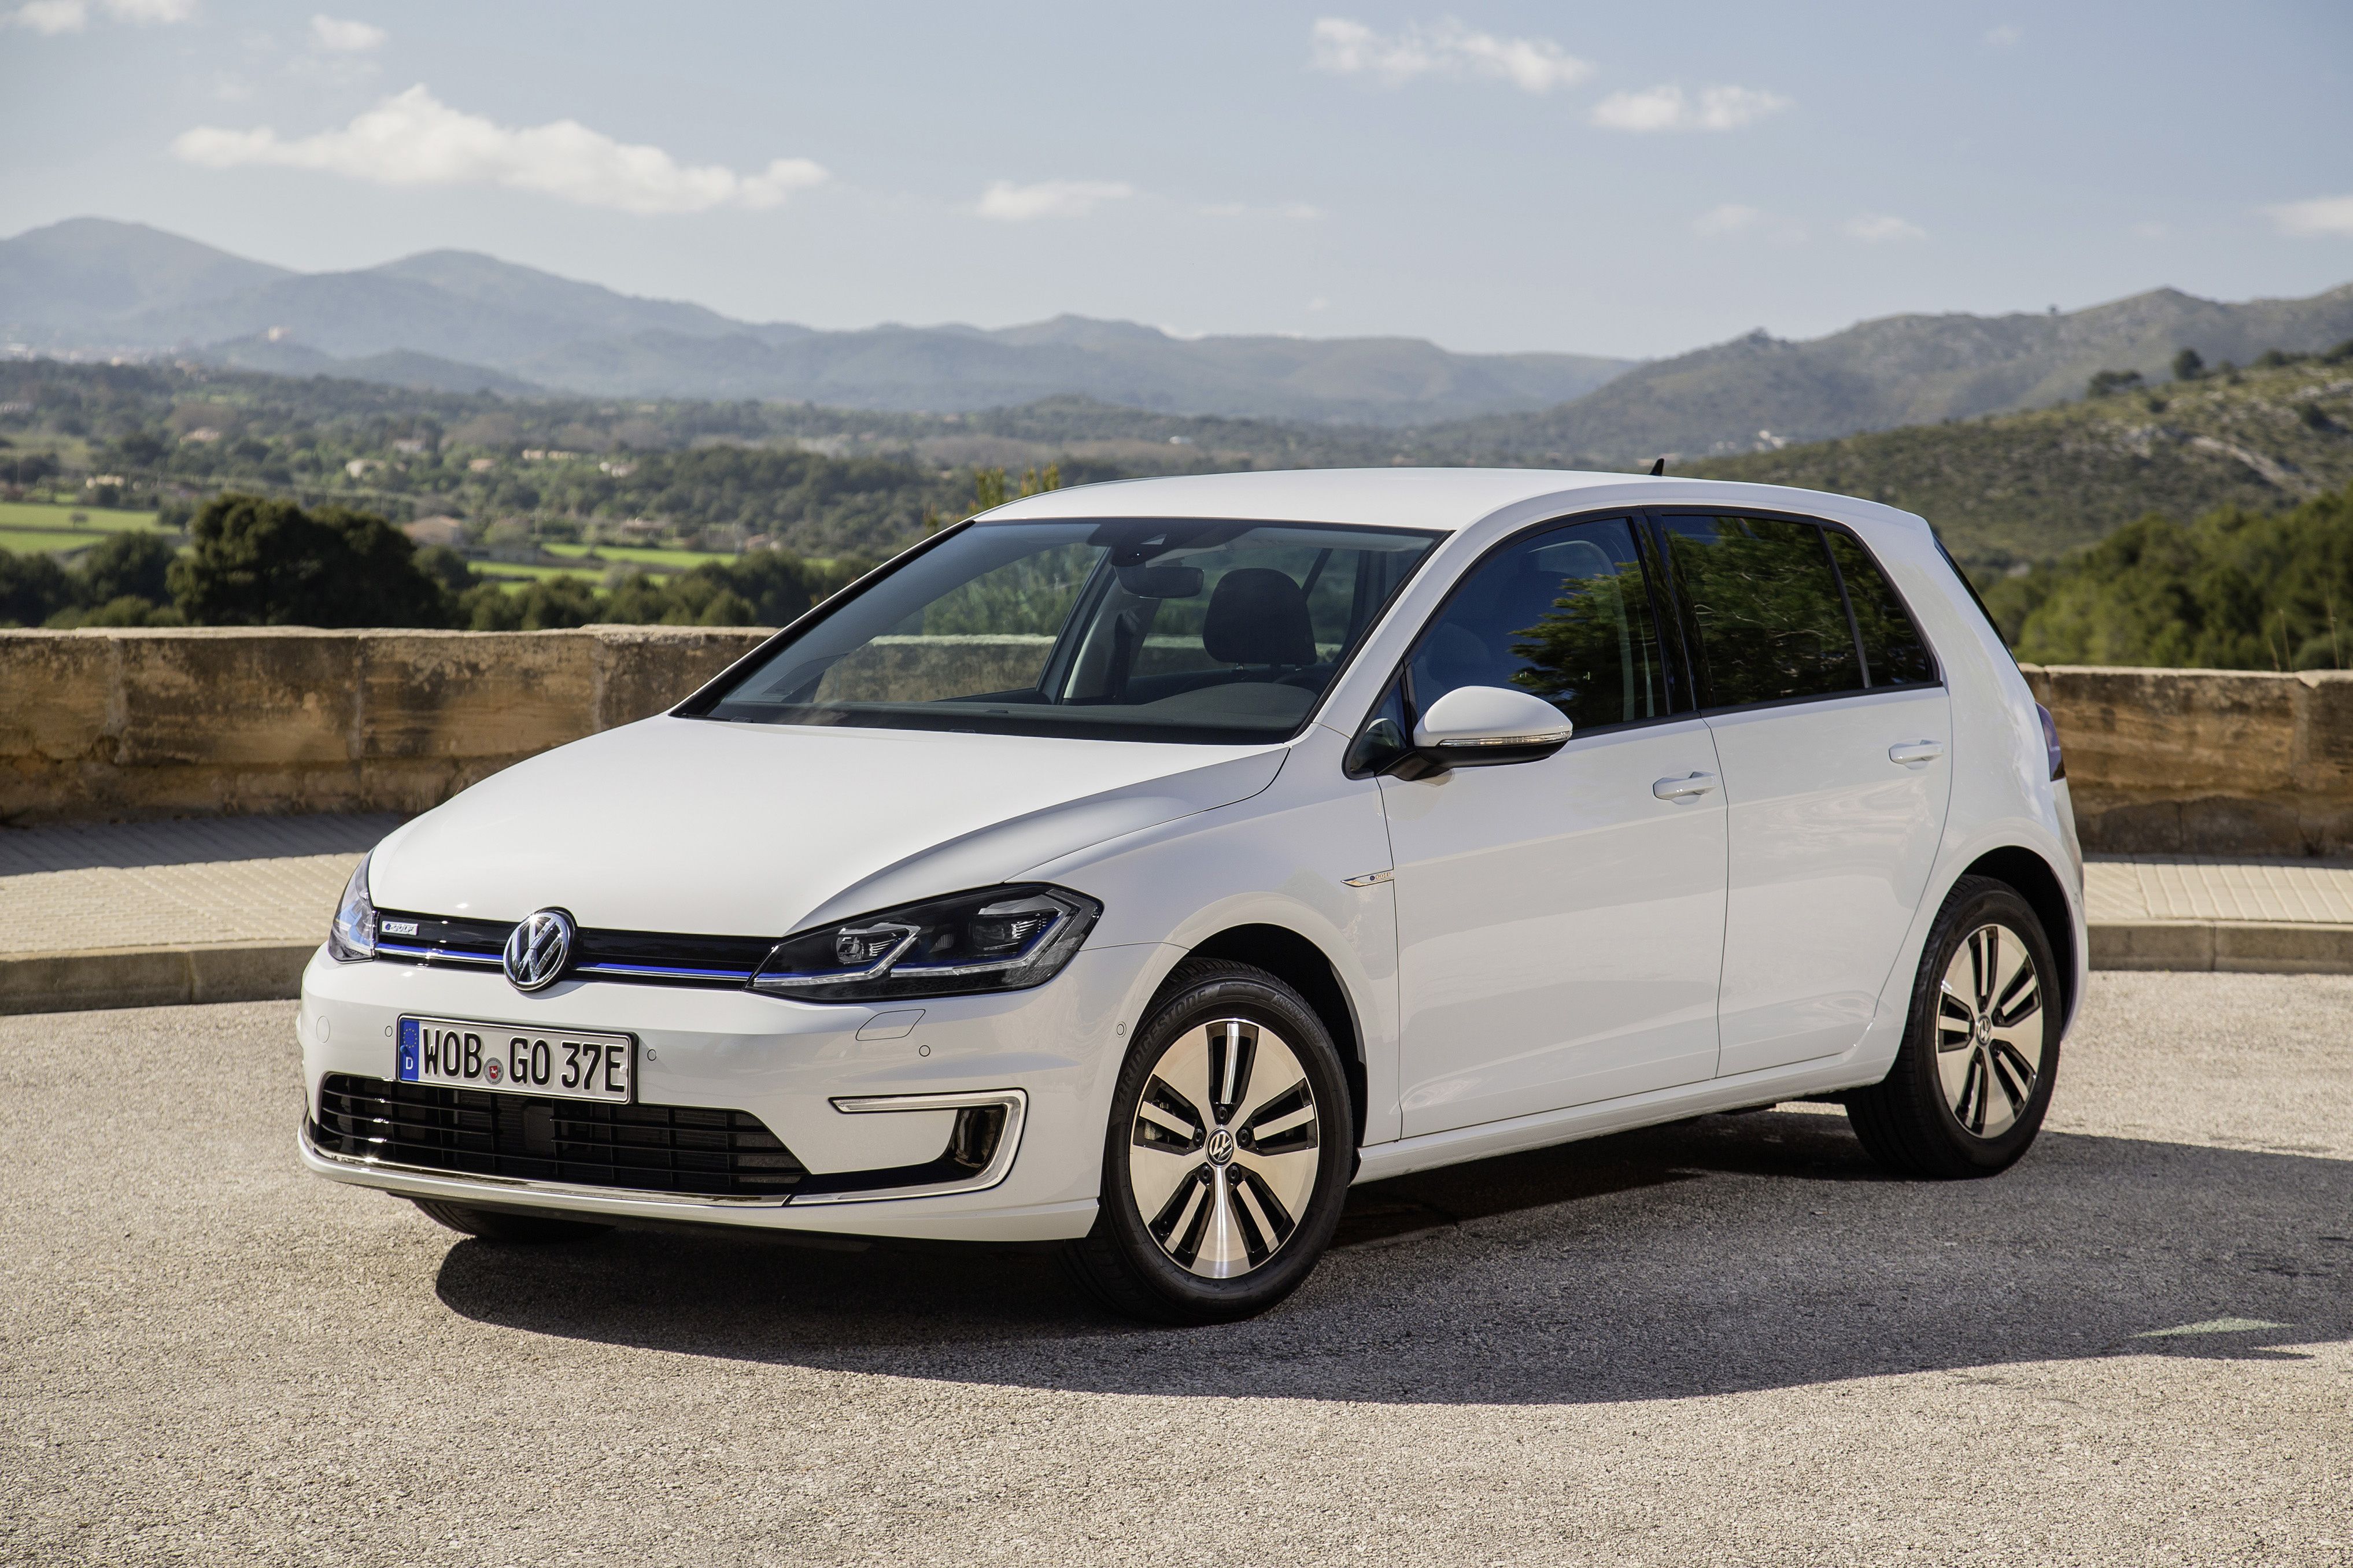 Volkswagen e-Golf Is Dead - Electric Golf Hatchback Discontinued